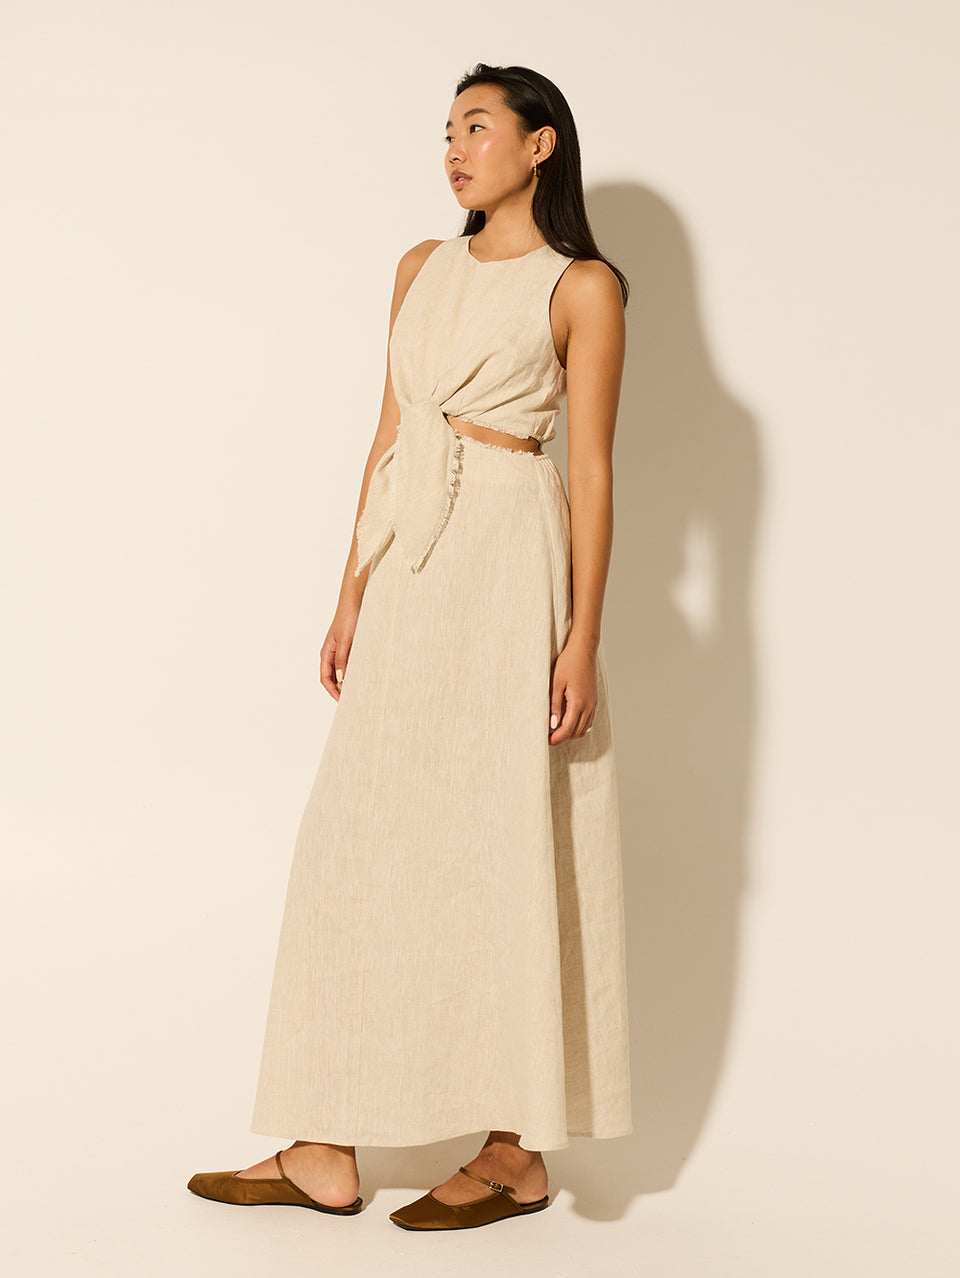 Ellie Cut Out Maxi Dress KIVARI | Model wears neutral linen maxi dress side view